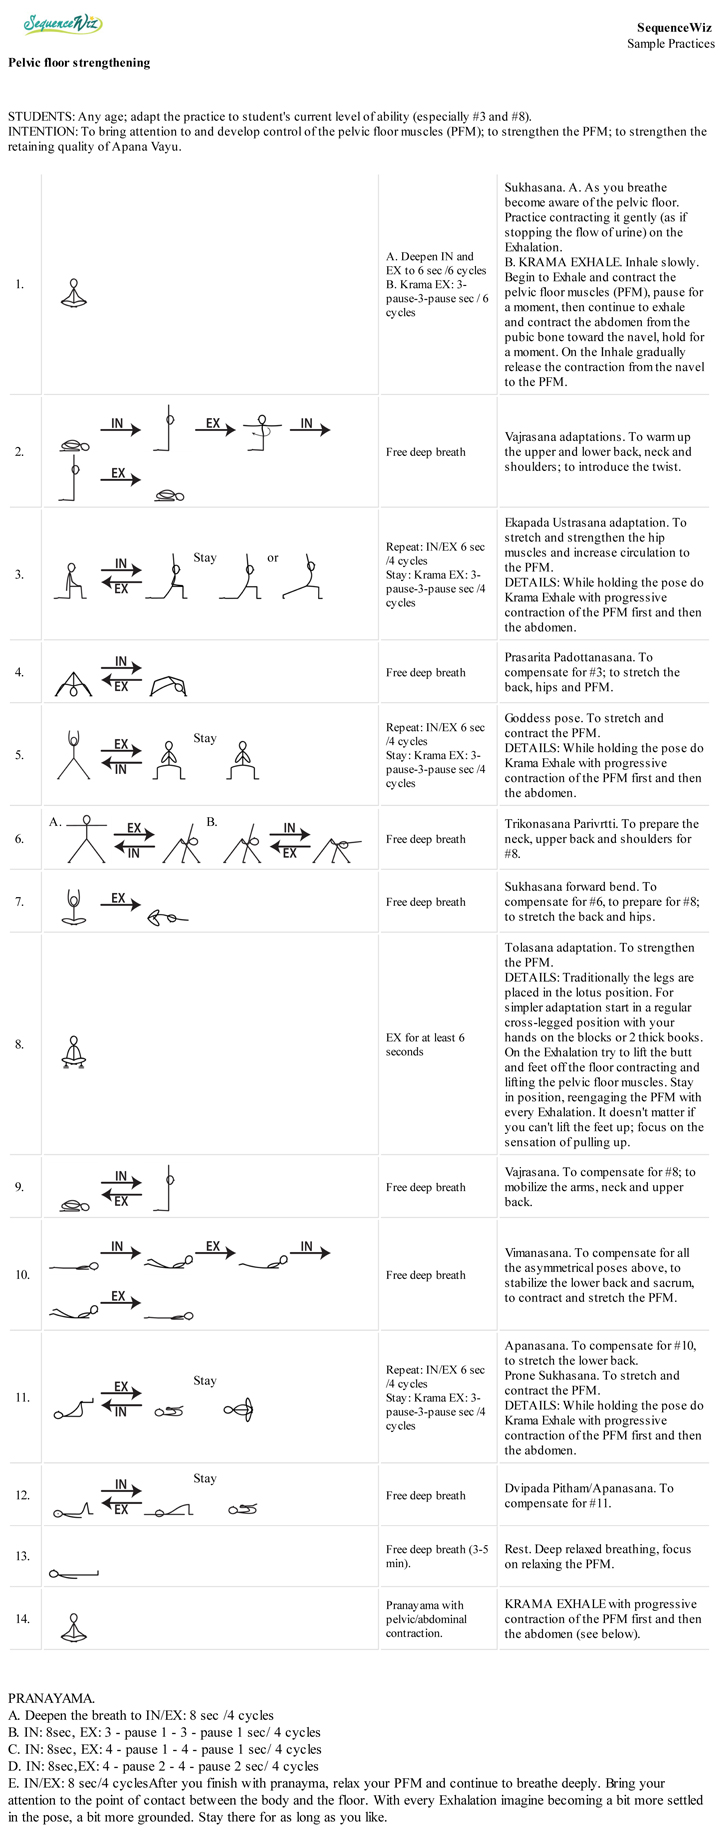 Yoga practice for pelvic floor strengthening